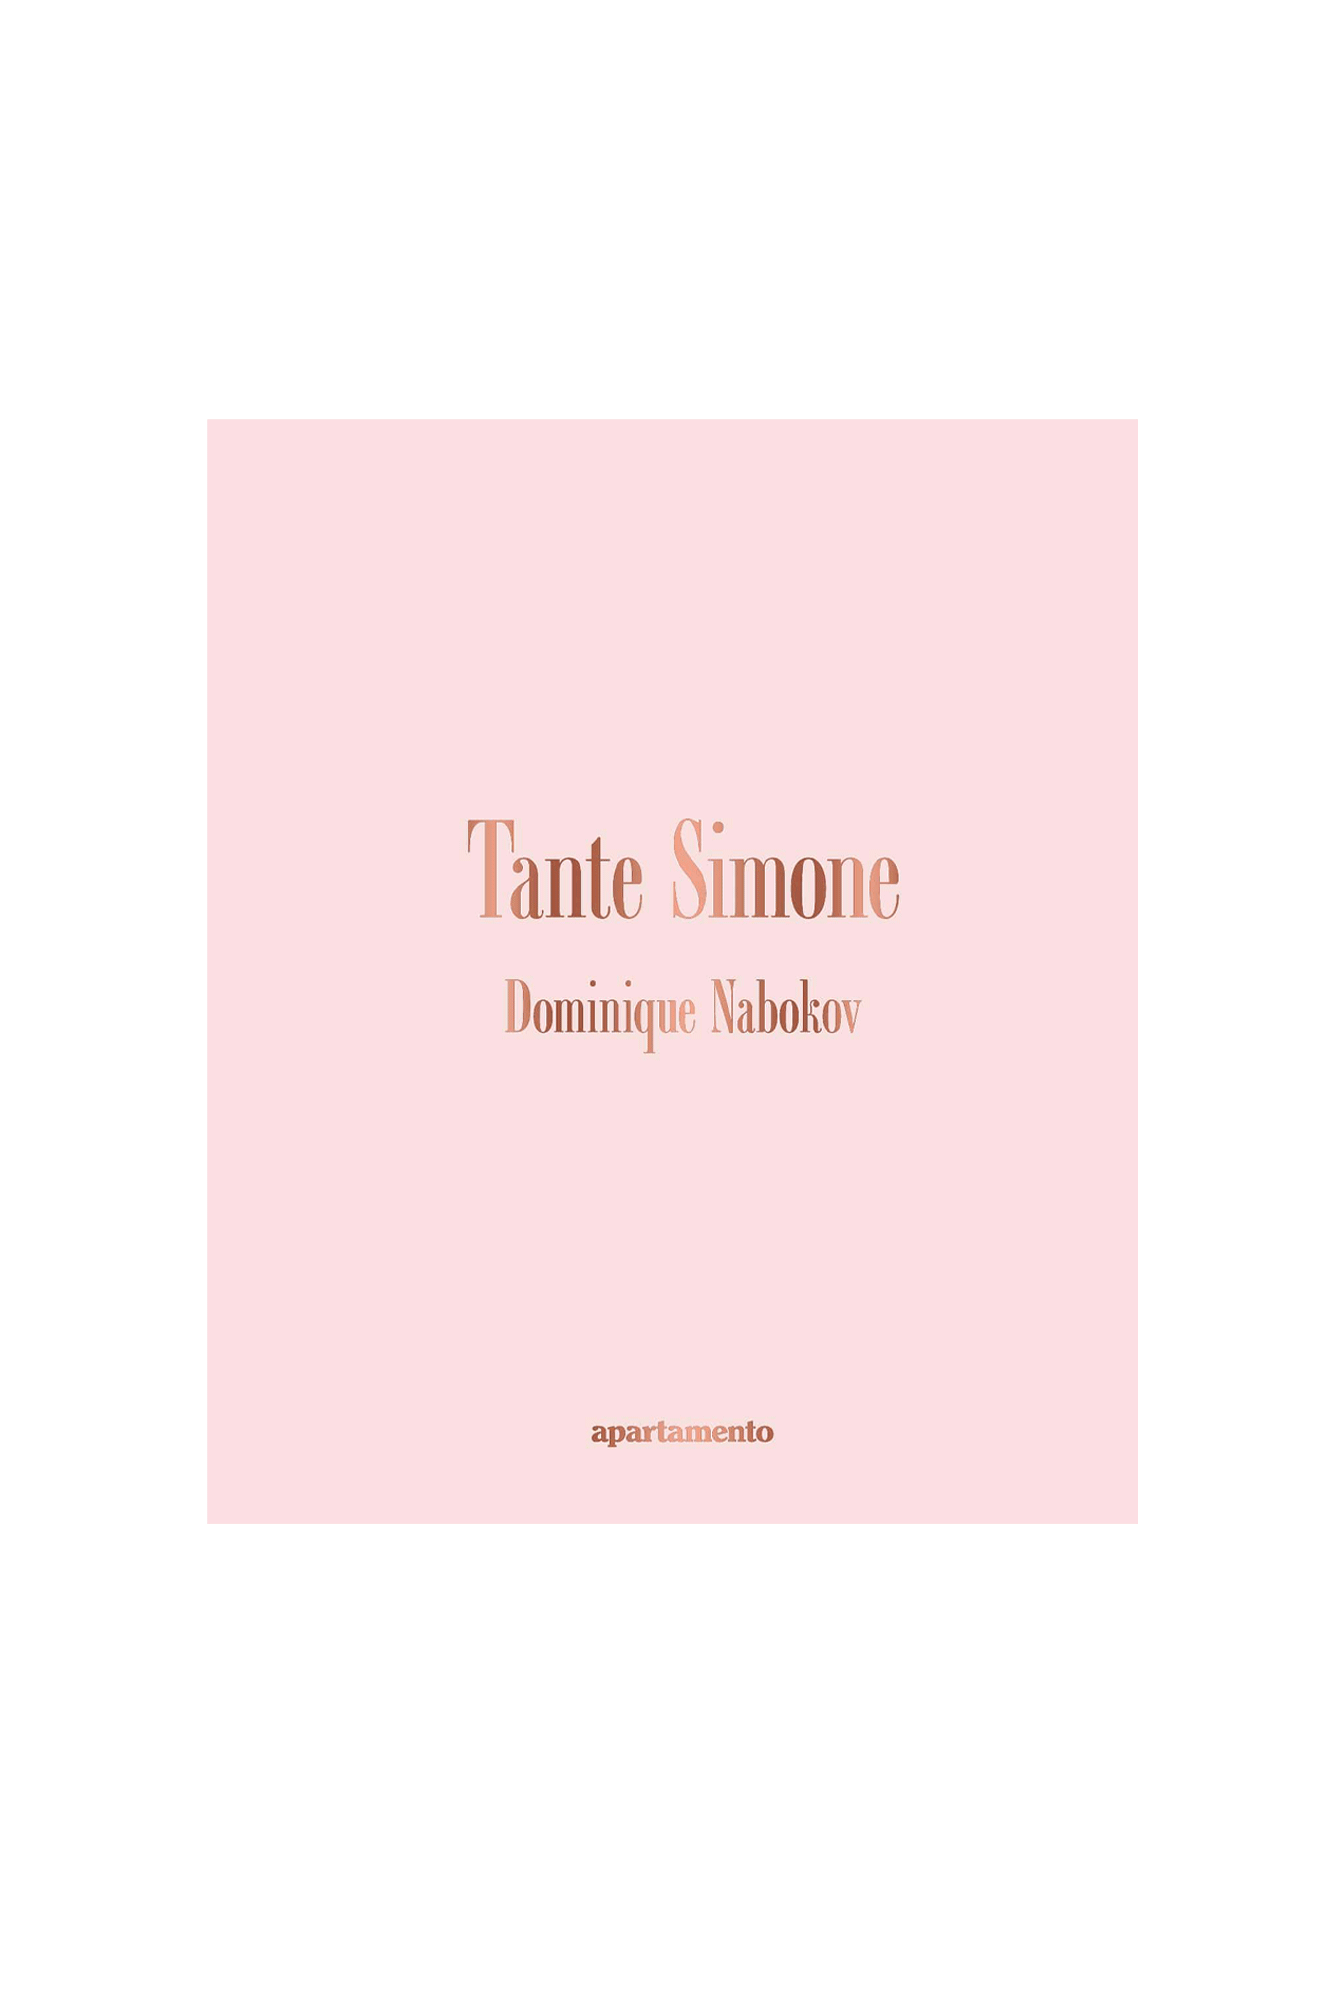 Tante Simone by Dominique Nabokov